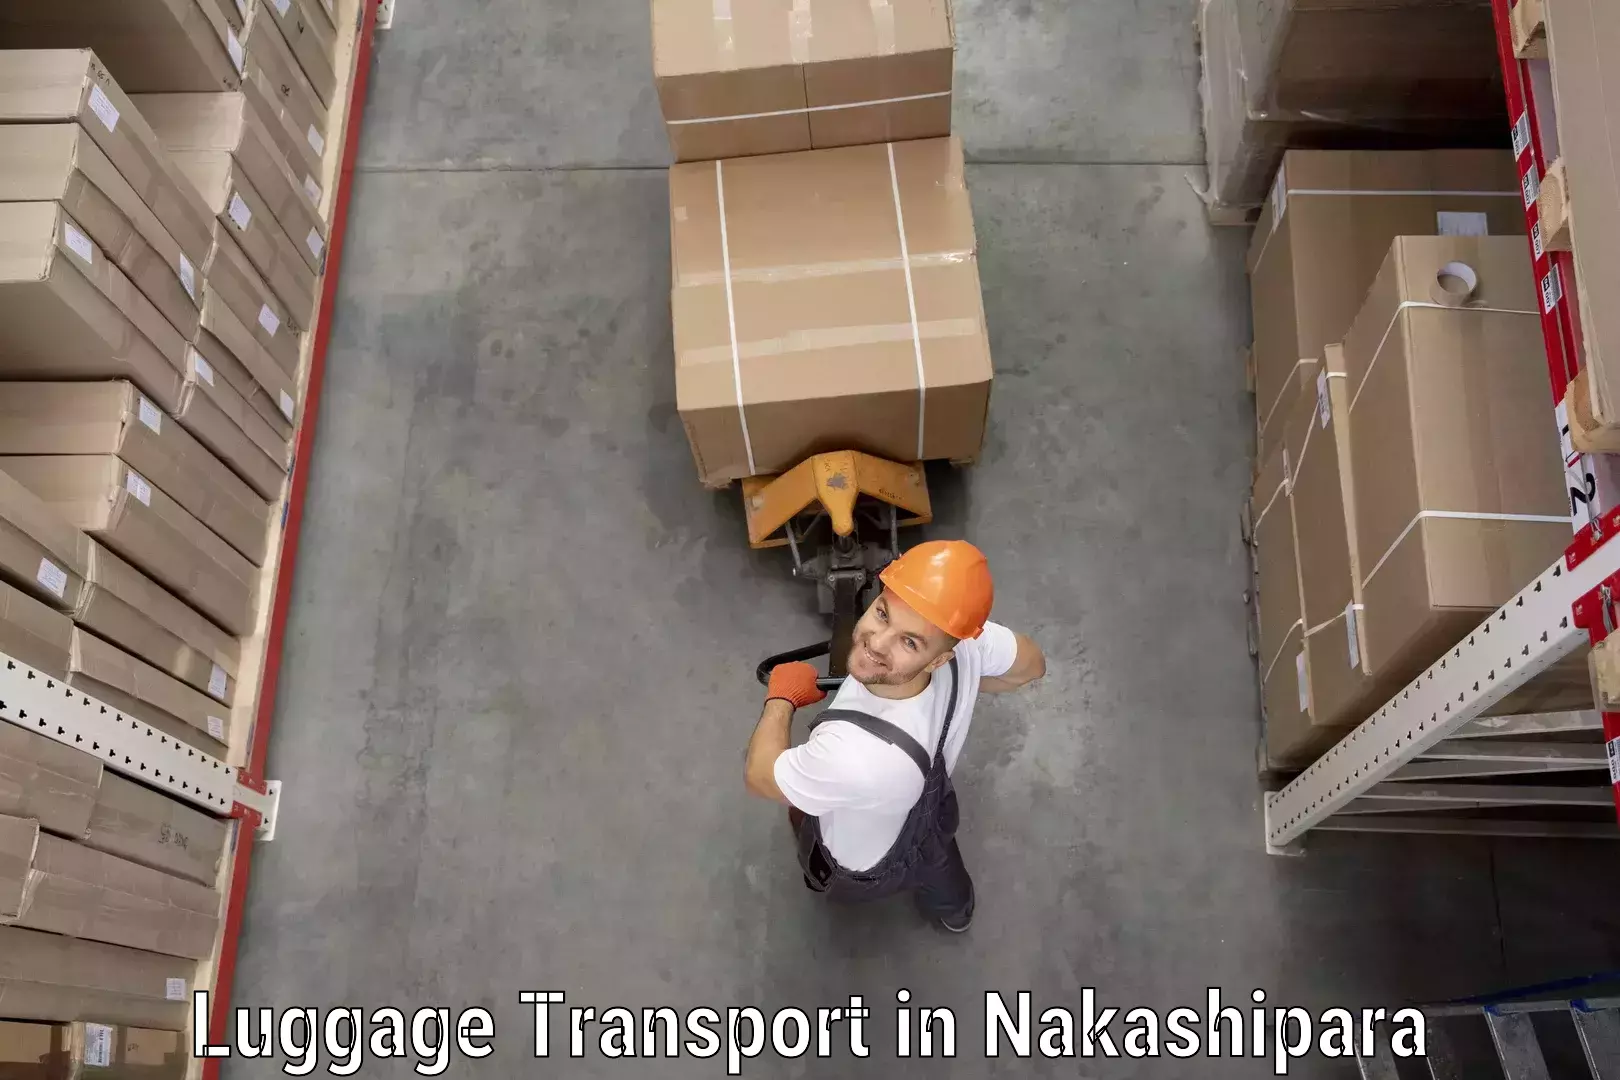 Luggage transport logistics in Nakashipara